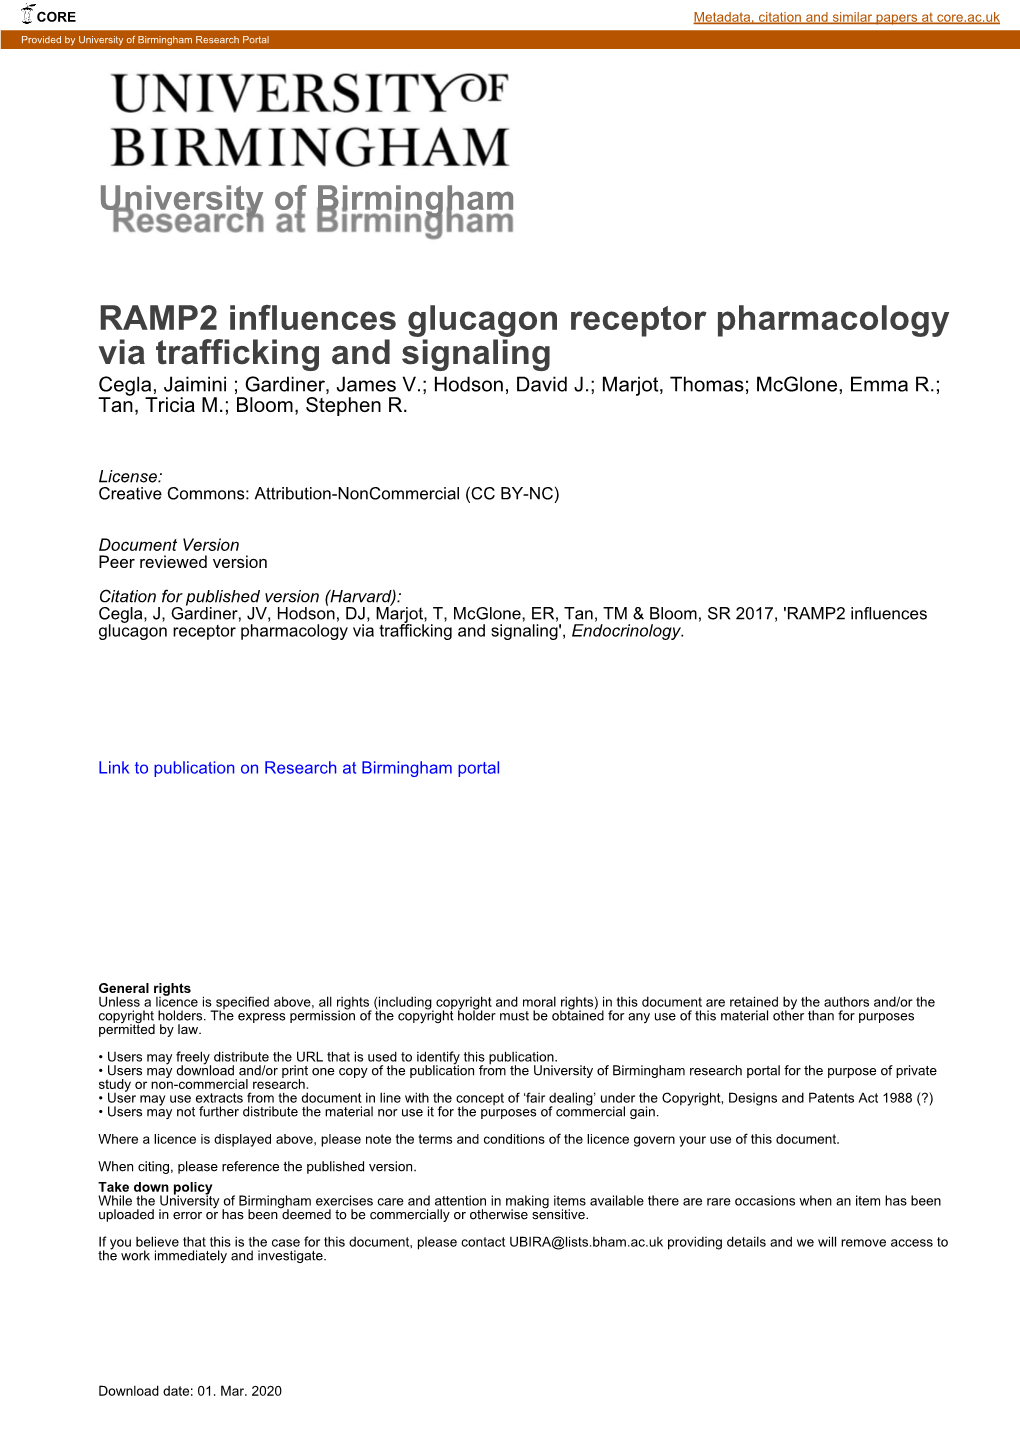 University of Birmingham RAMP2 Influences Glucagon Receptor